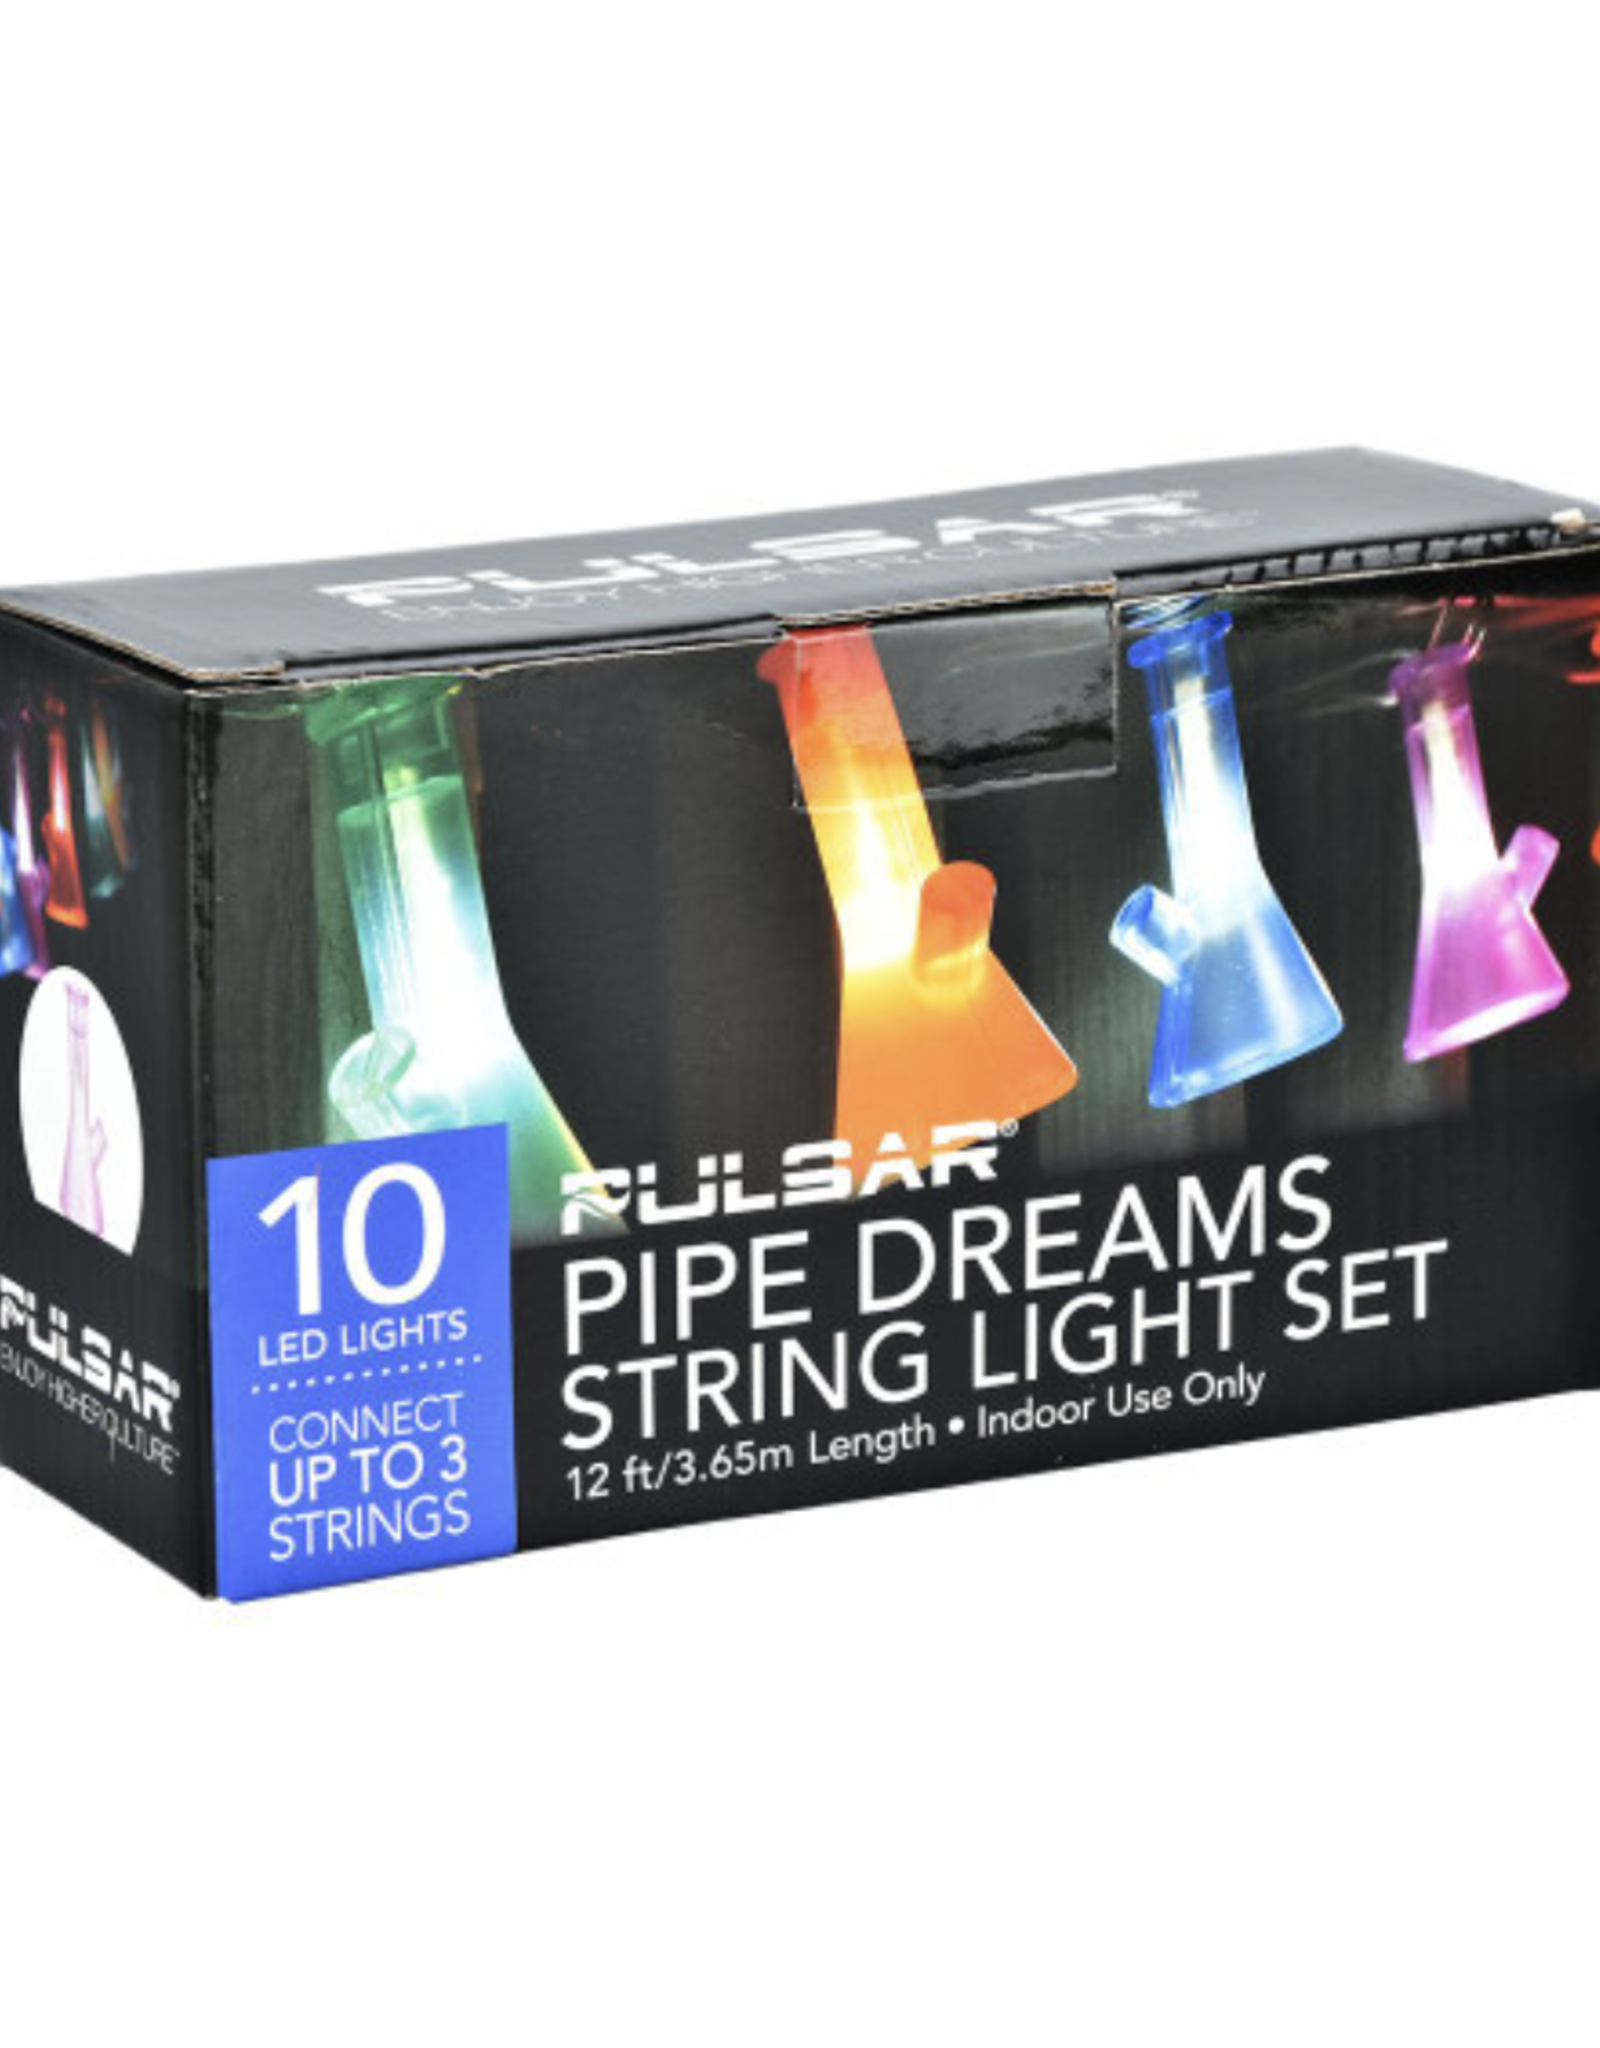 Pipe Dreams Bong LED String Light Set - 10 Lights